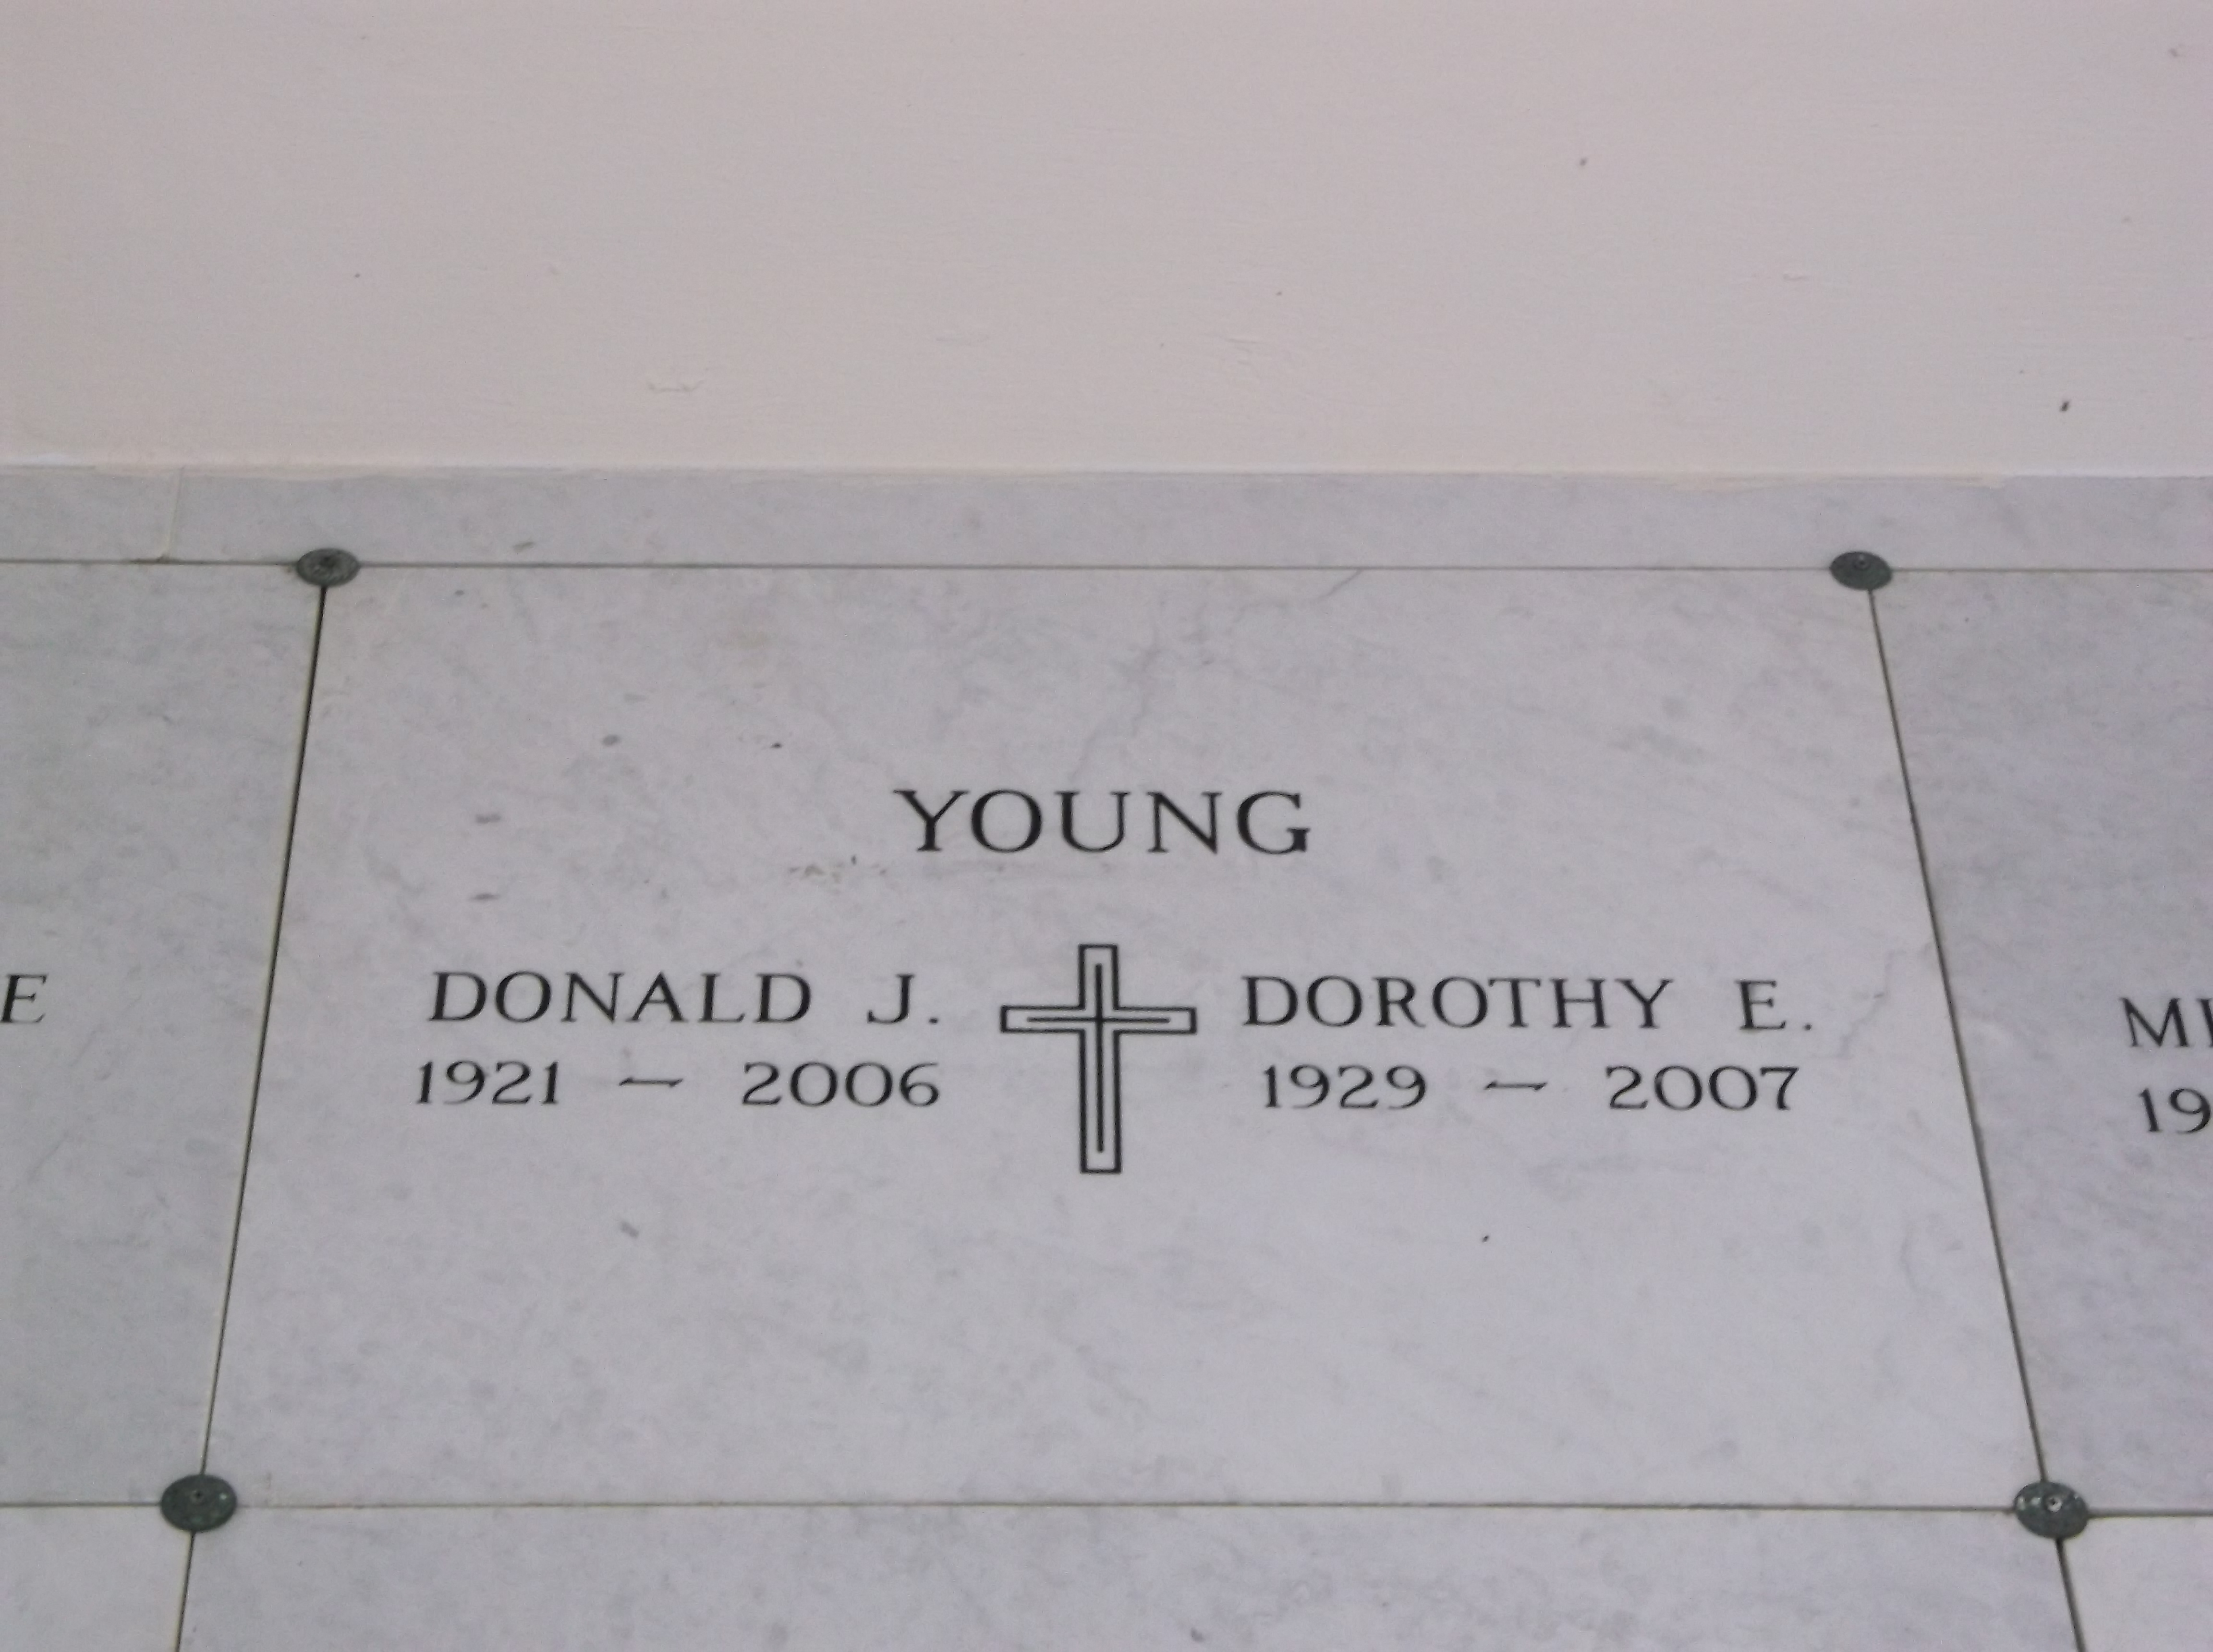 Donald J Young